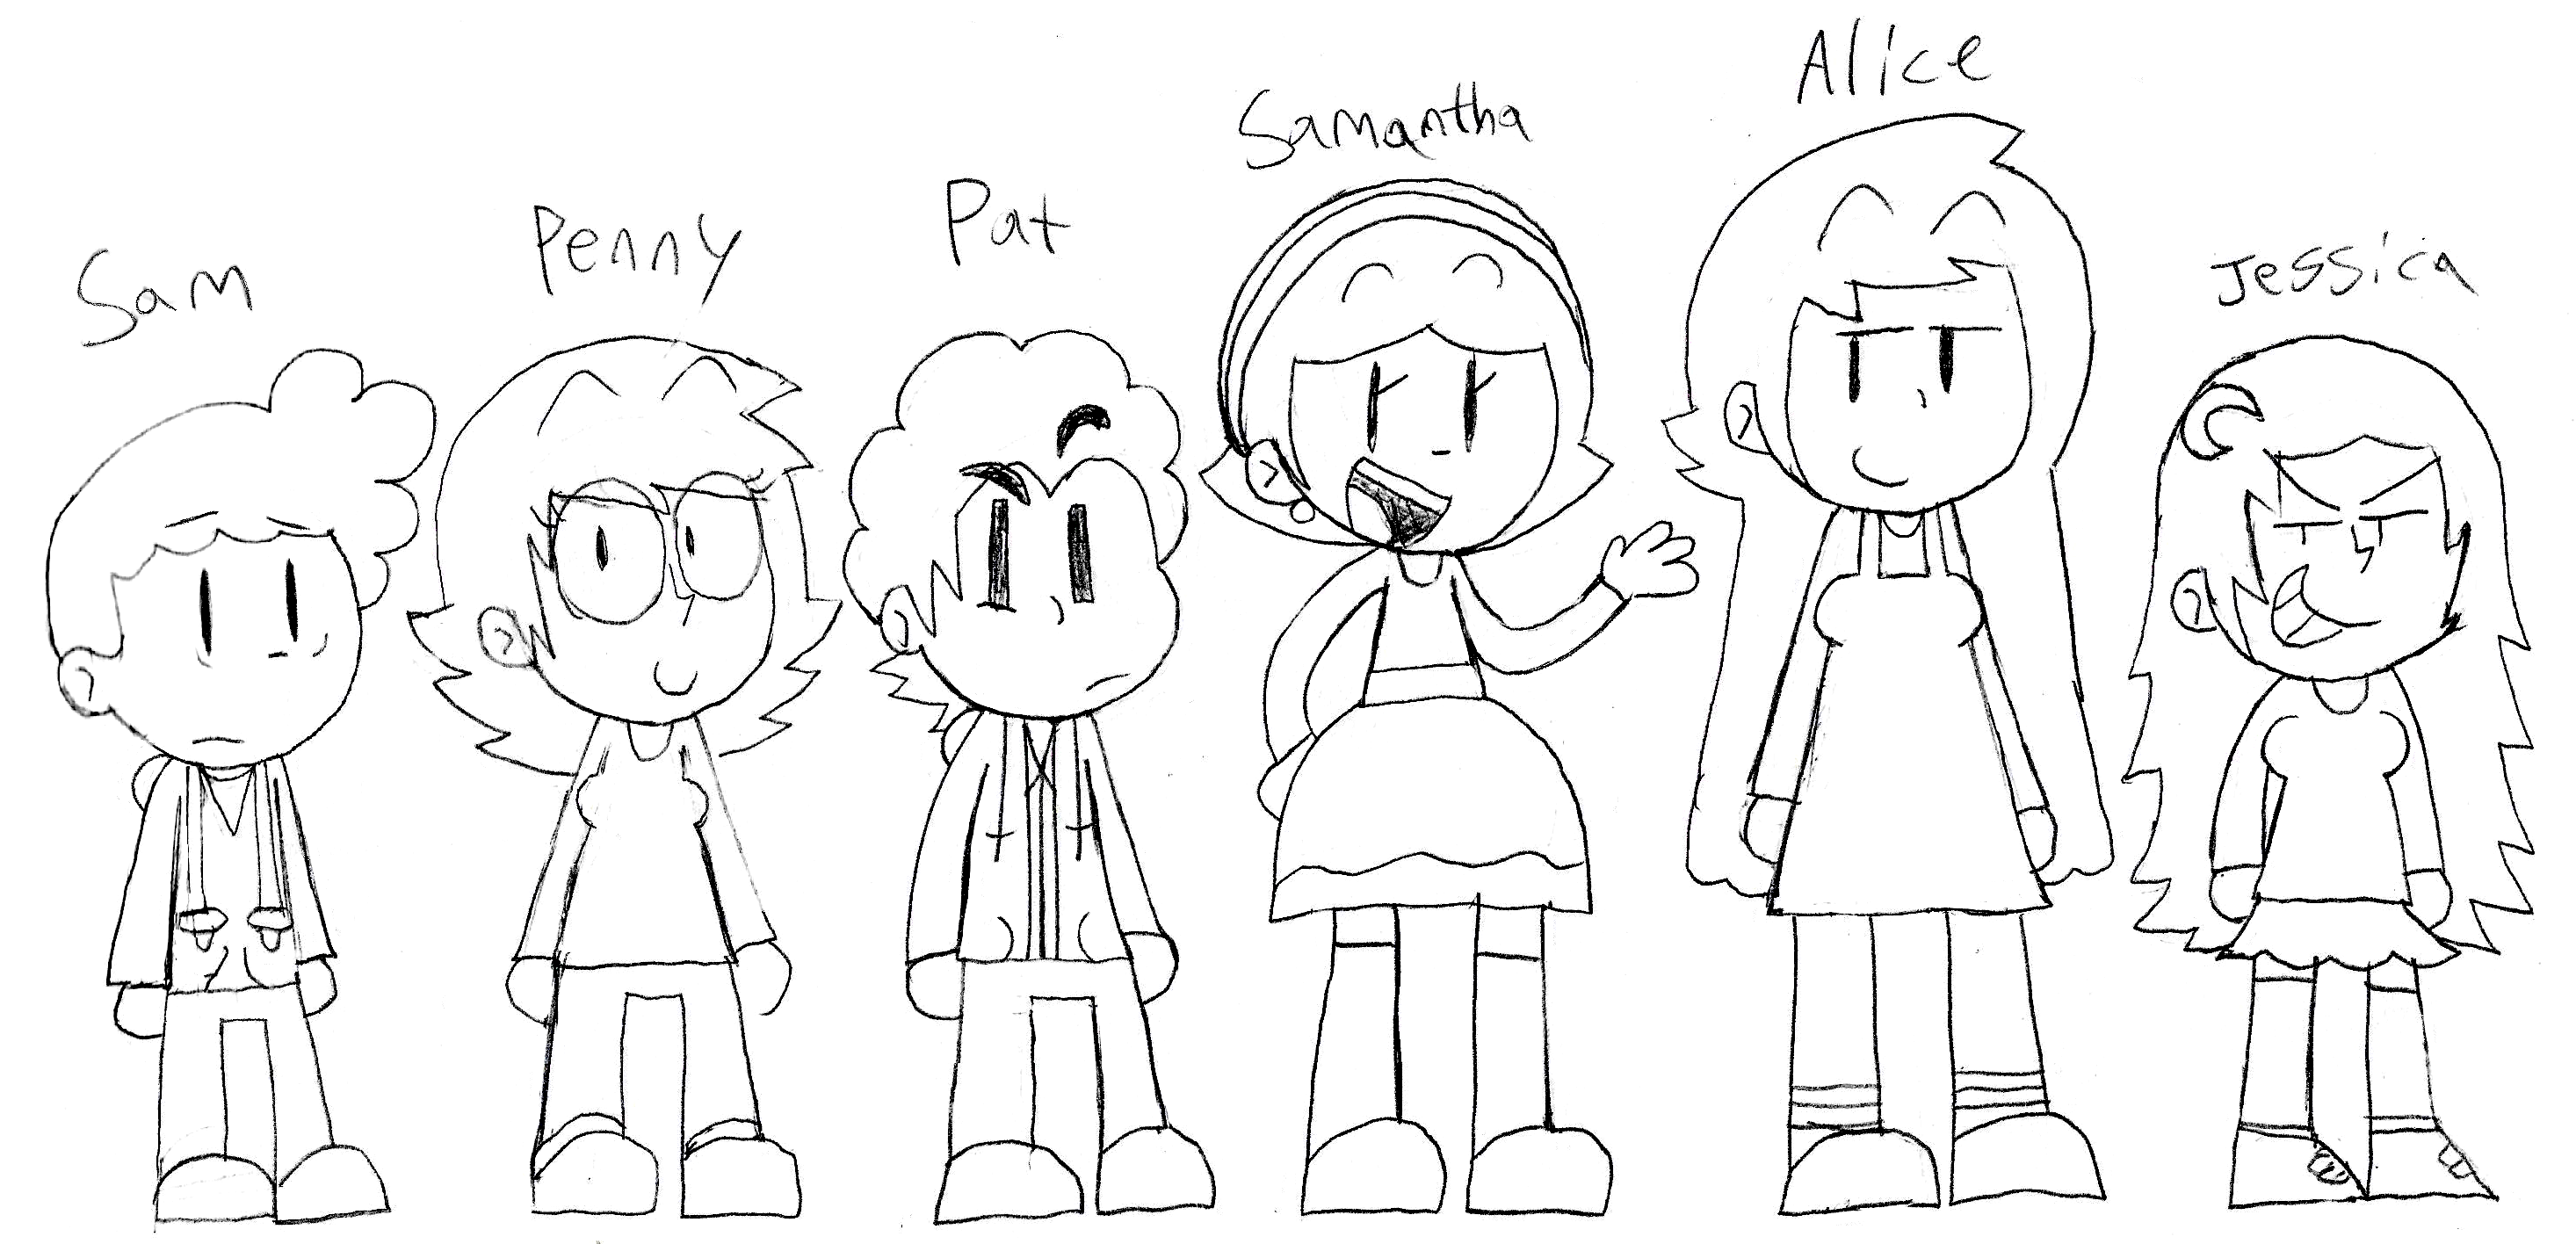 main characters